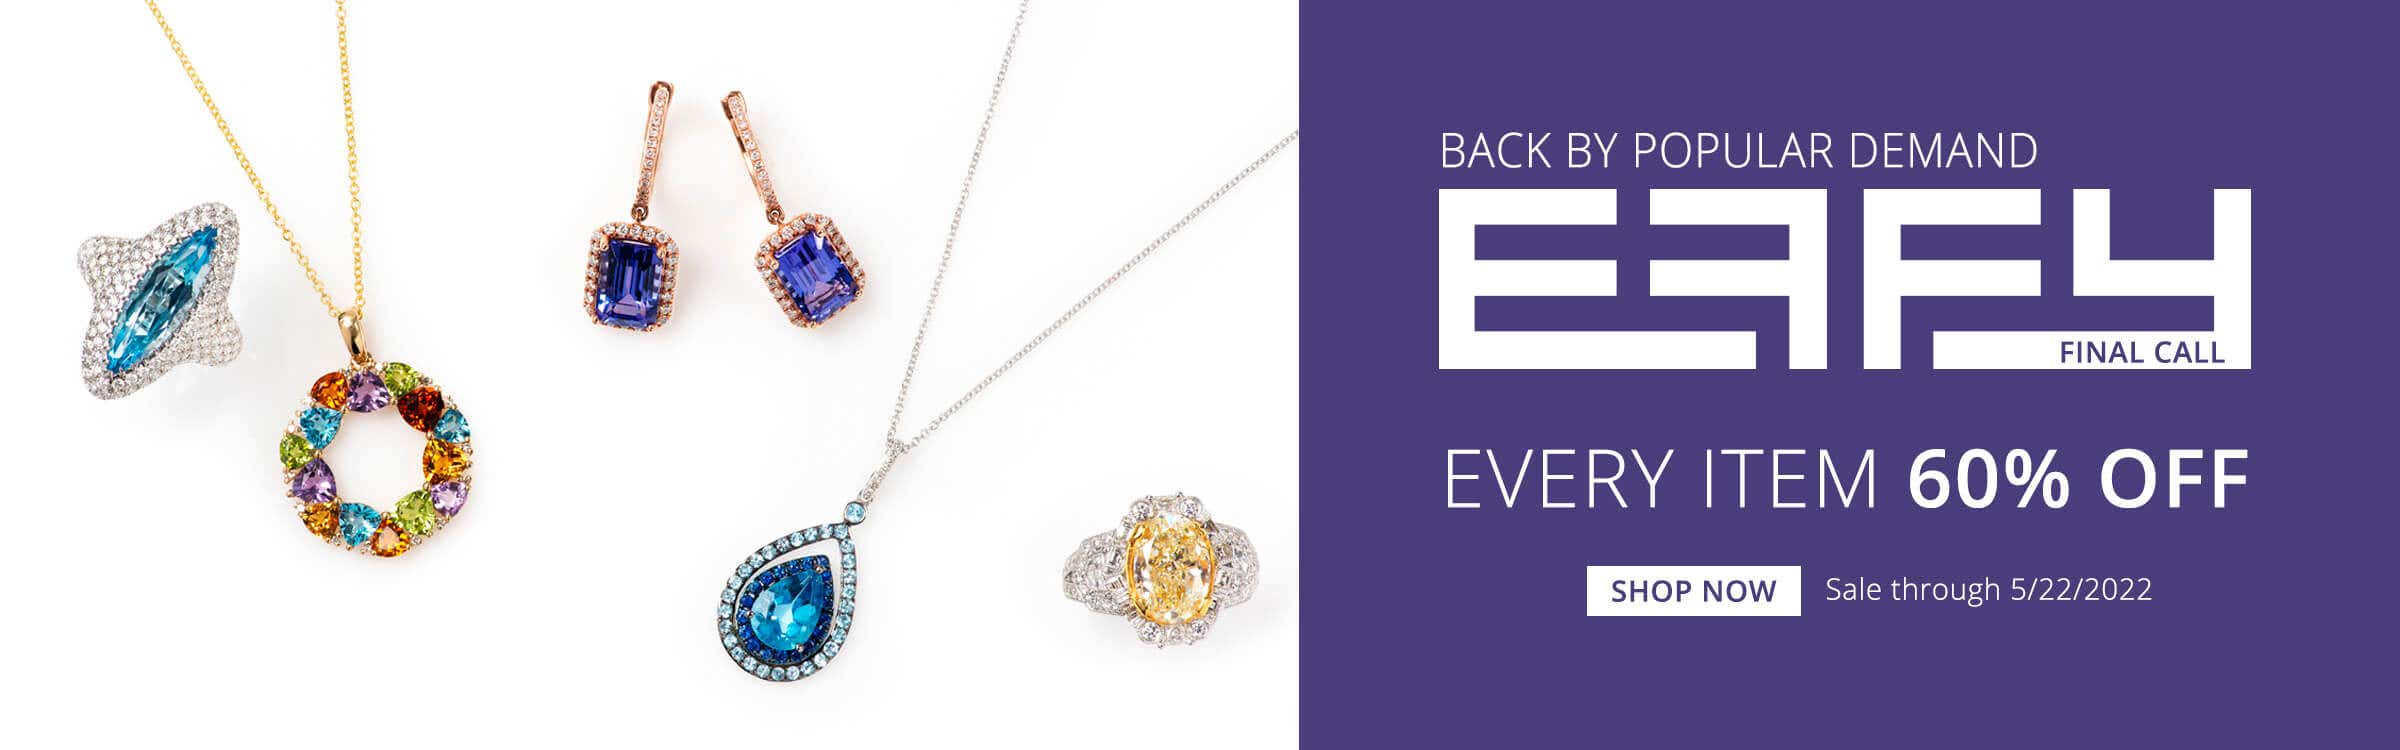 Gem Shopping Network Fine Jewelry - Effy Sale